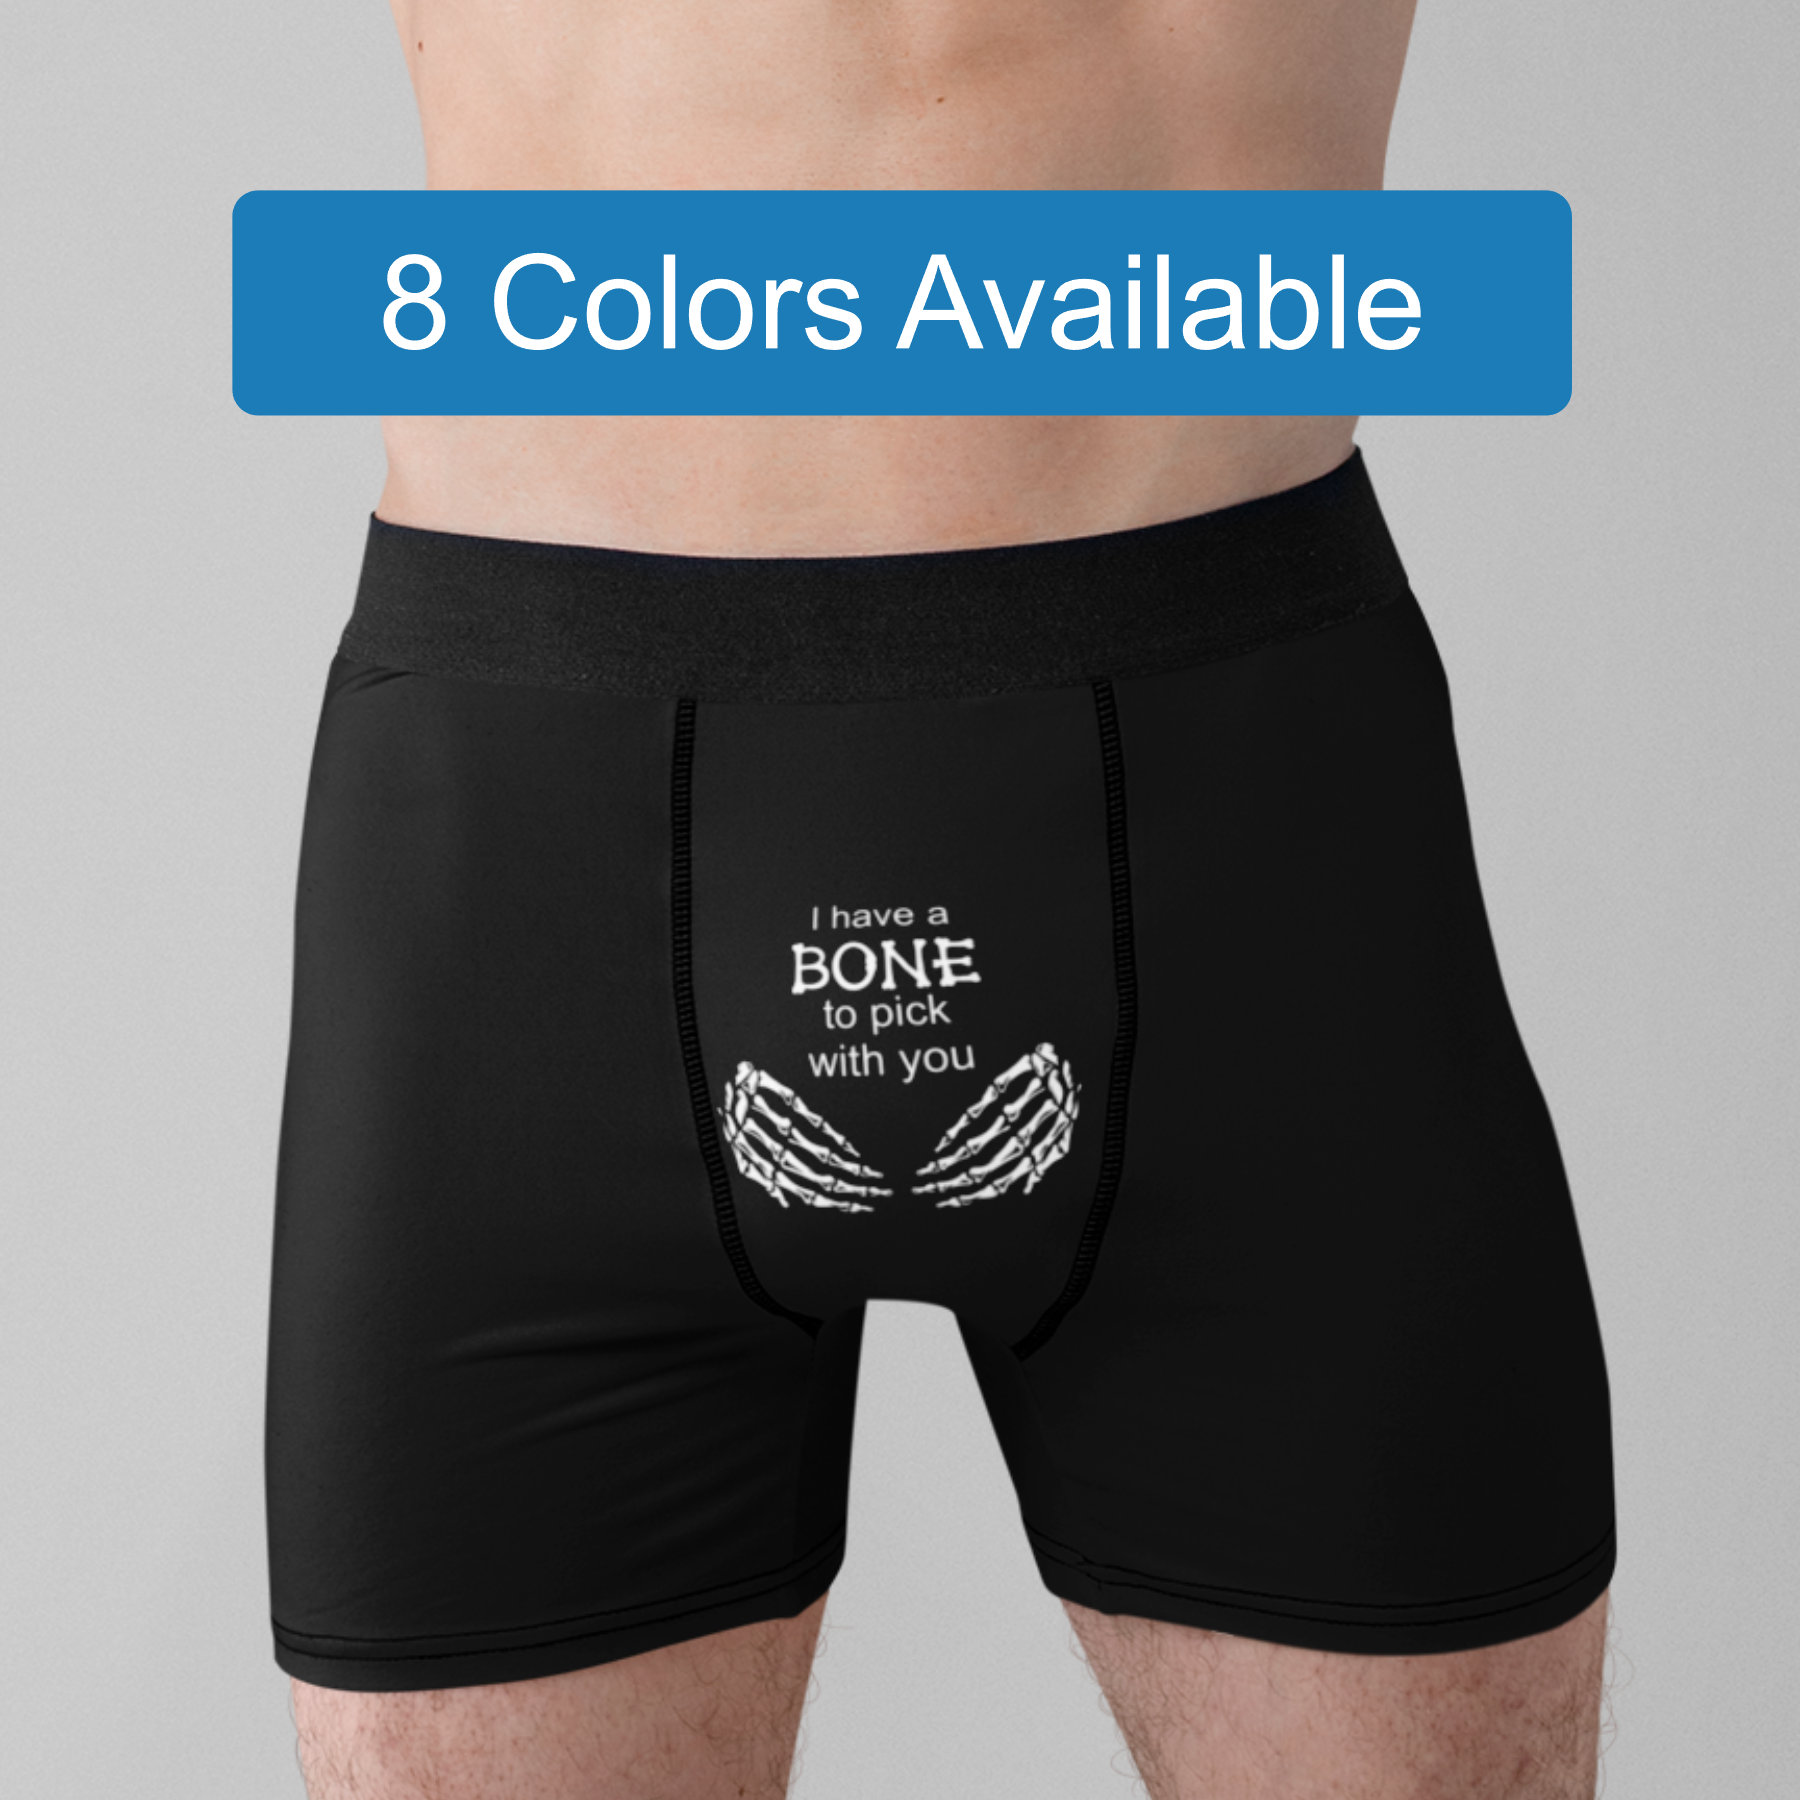 Personalized Custom Sexy Panties Boy-shorts, Sexy Cute Lingerie, Women's  Underwear 